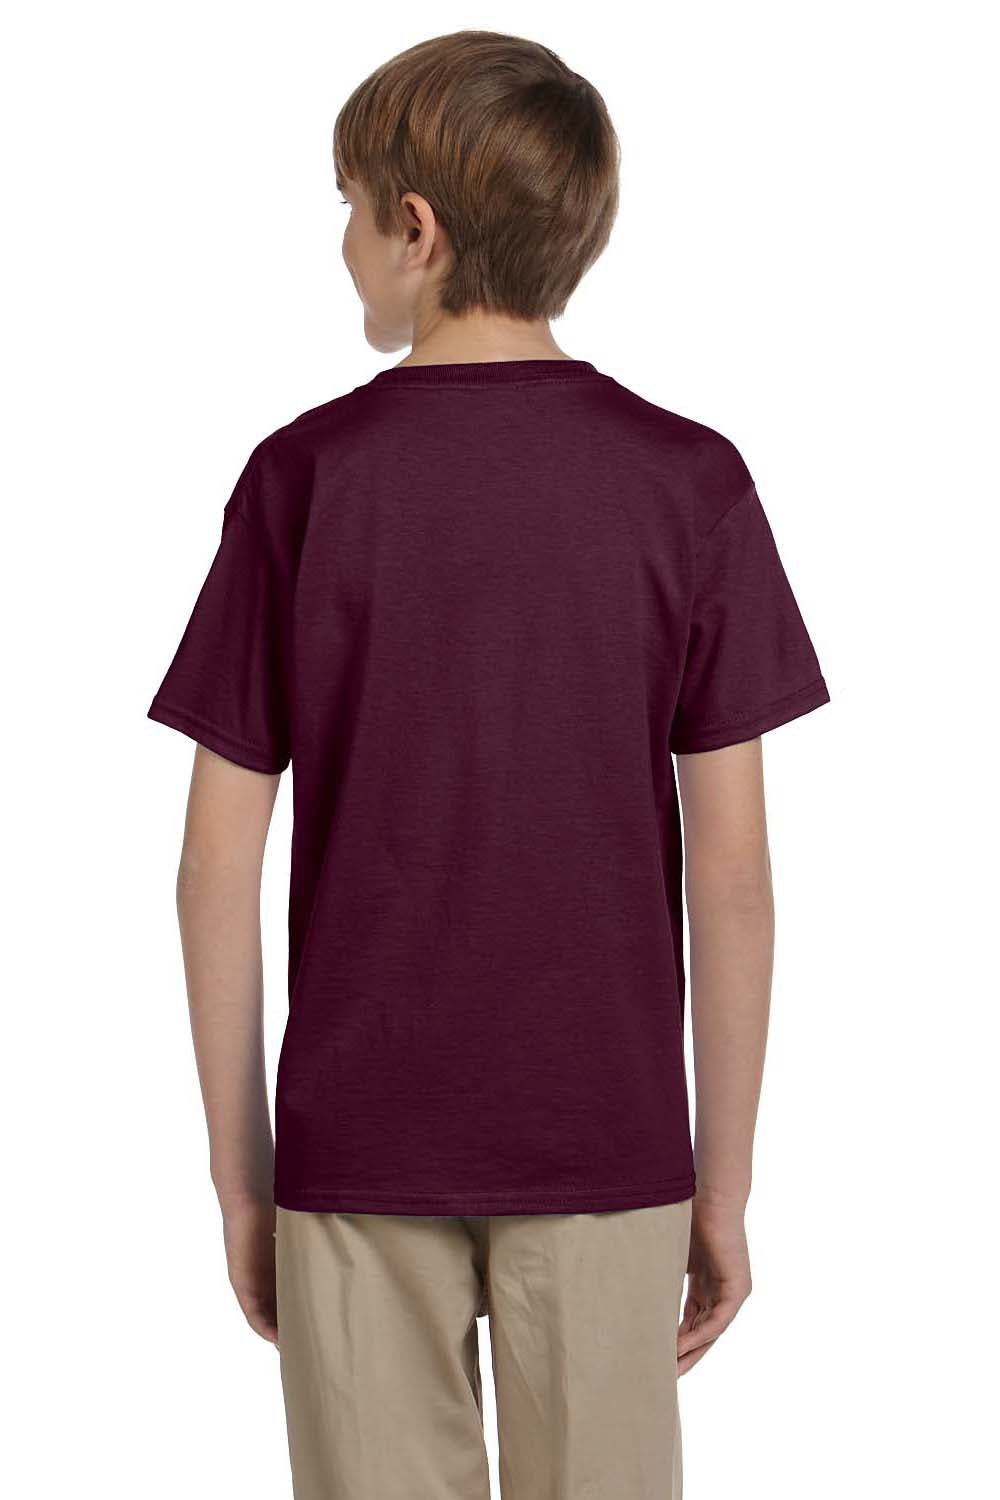 Hanes 5370 Youth EcoSmart Short Sleeve Crewneck T-Shirt Maroon Back